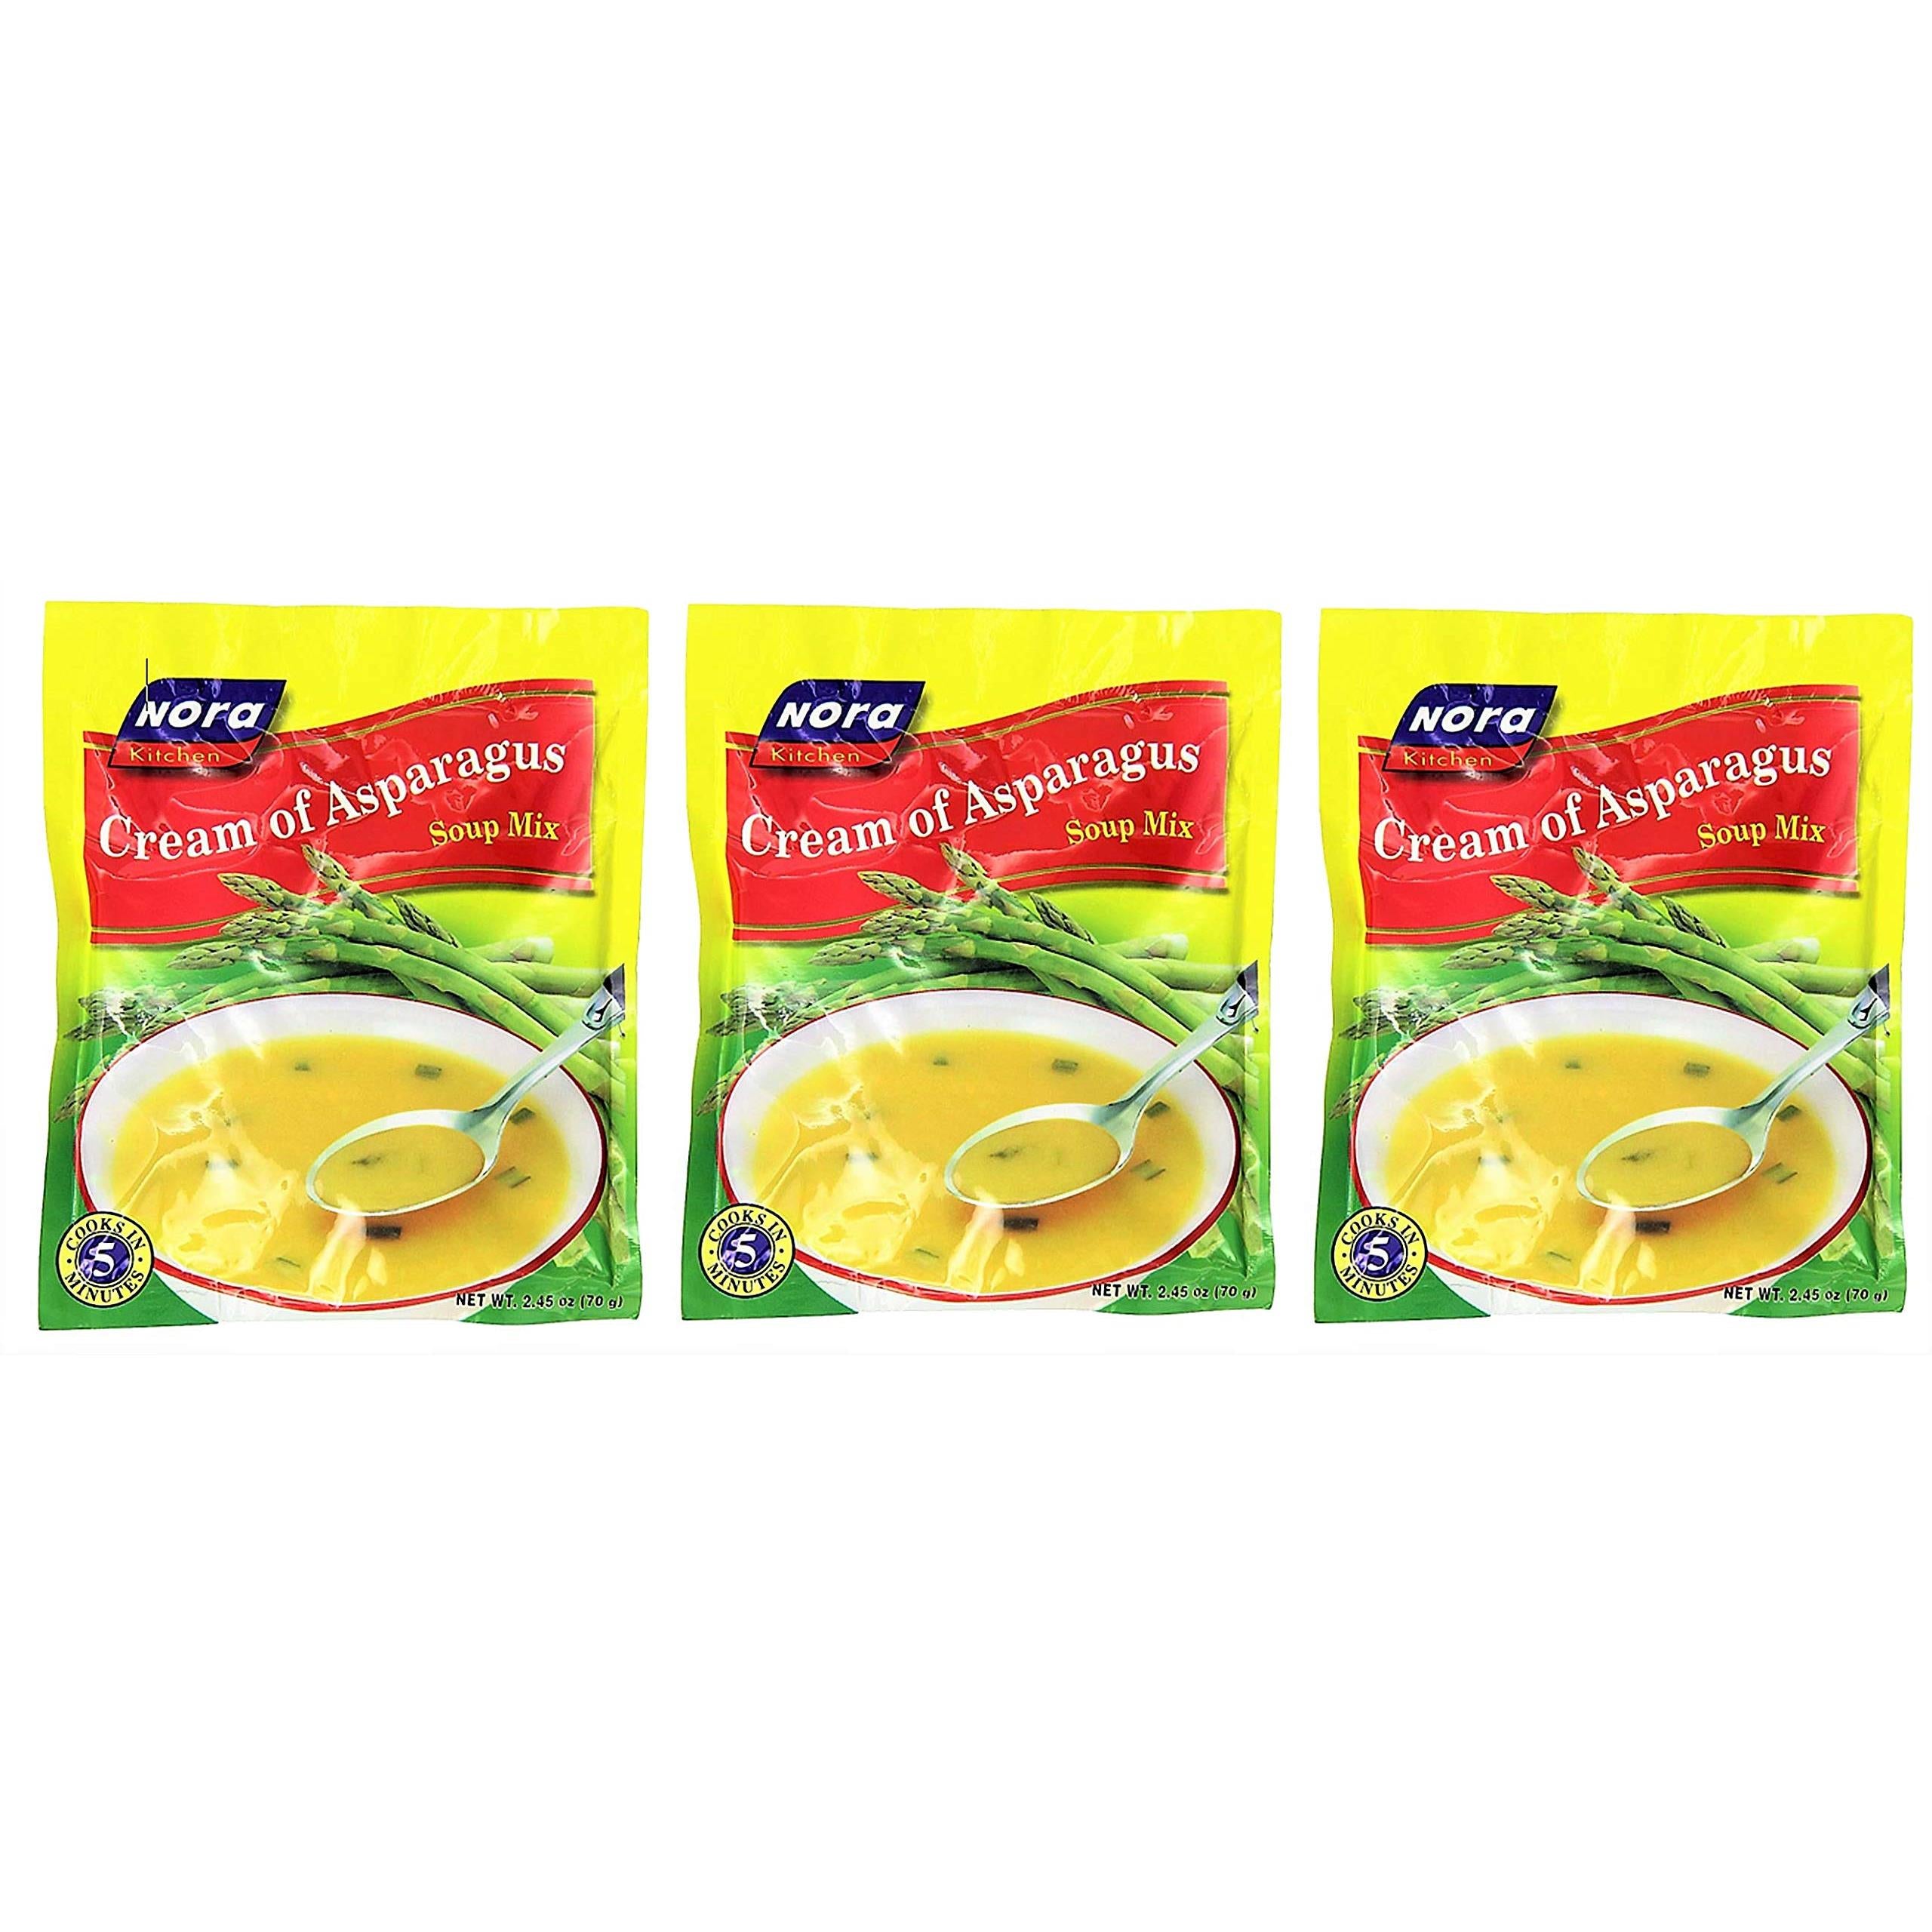 Nora Kitchen Cream of Asparagus Soup Mix 2.45oz (70g), 3 Pack